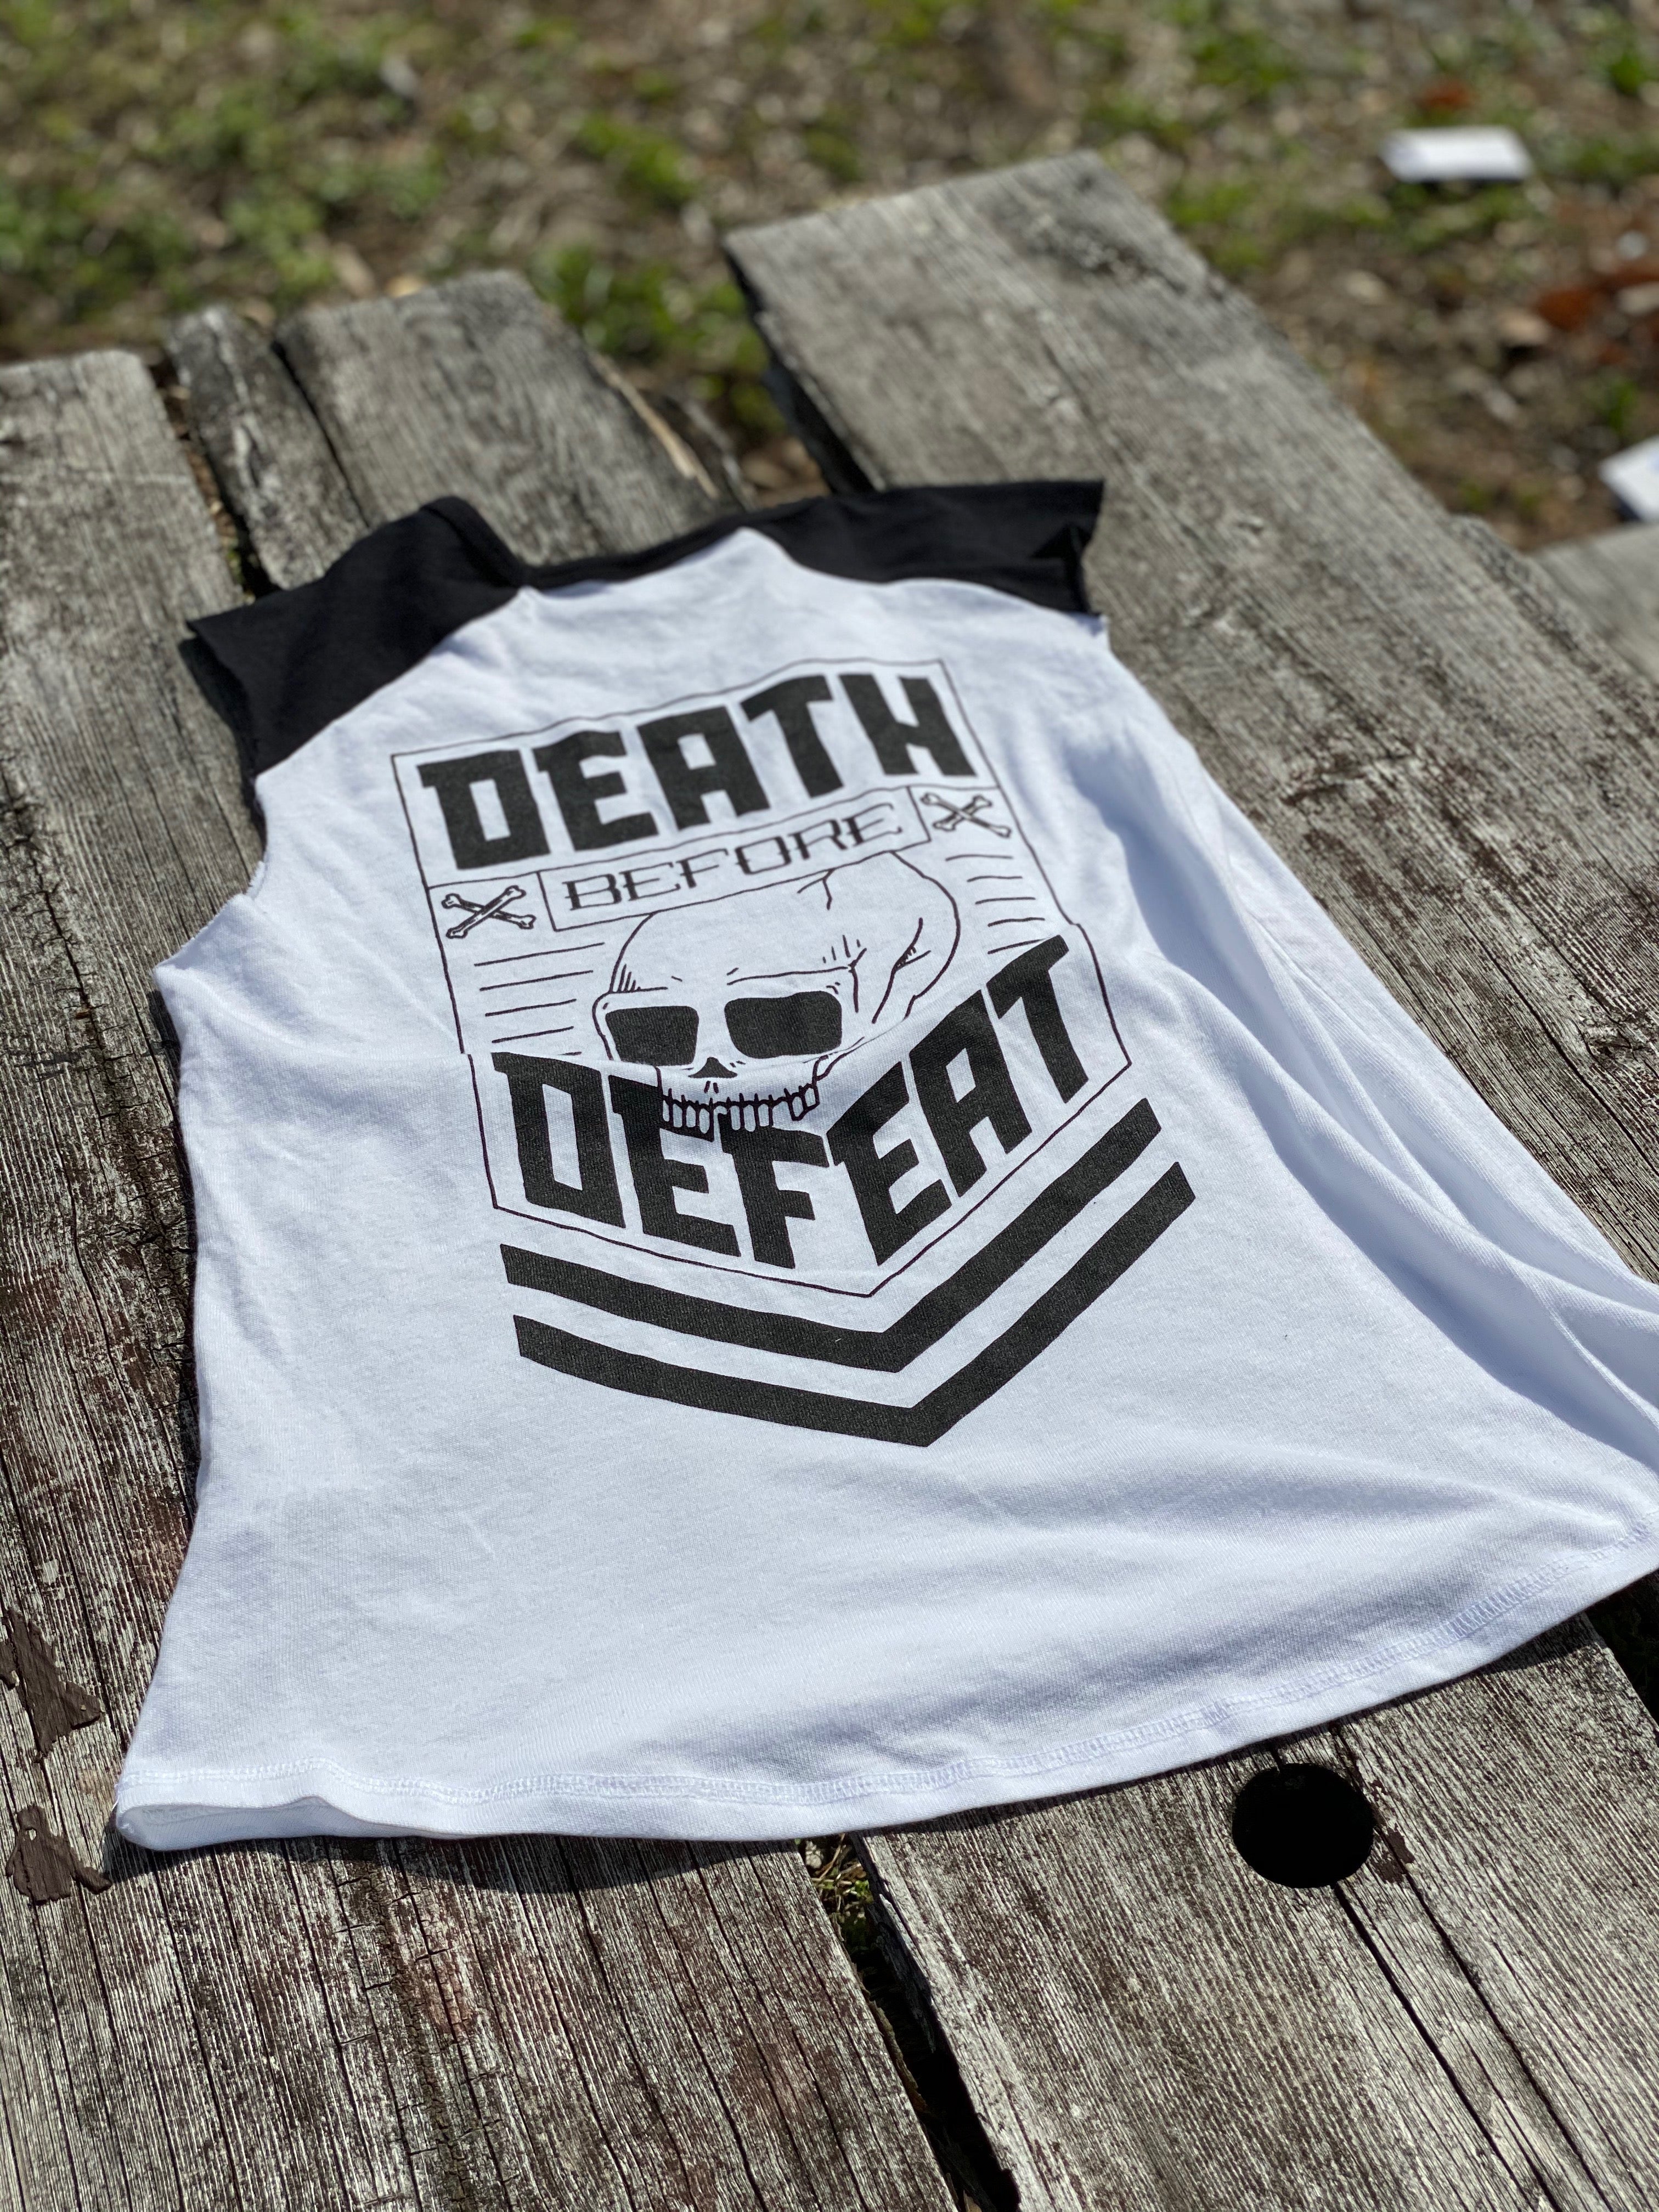 Death Before Defeat- Women's muscle tank